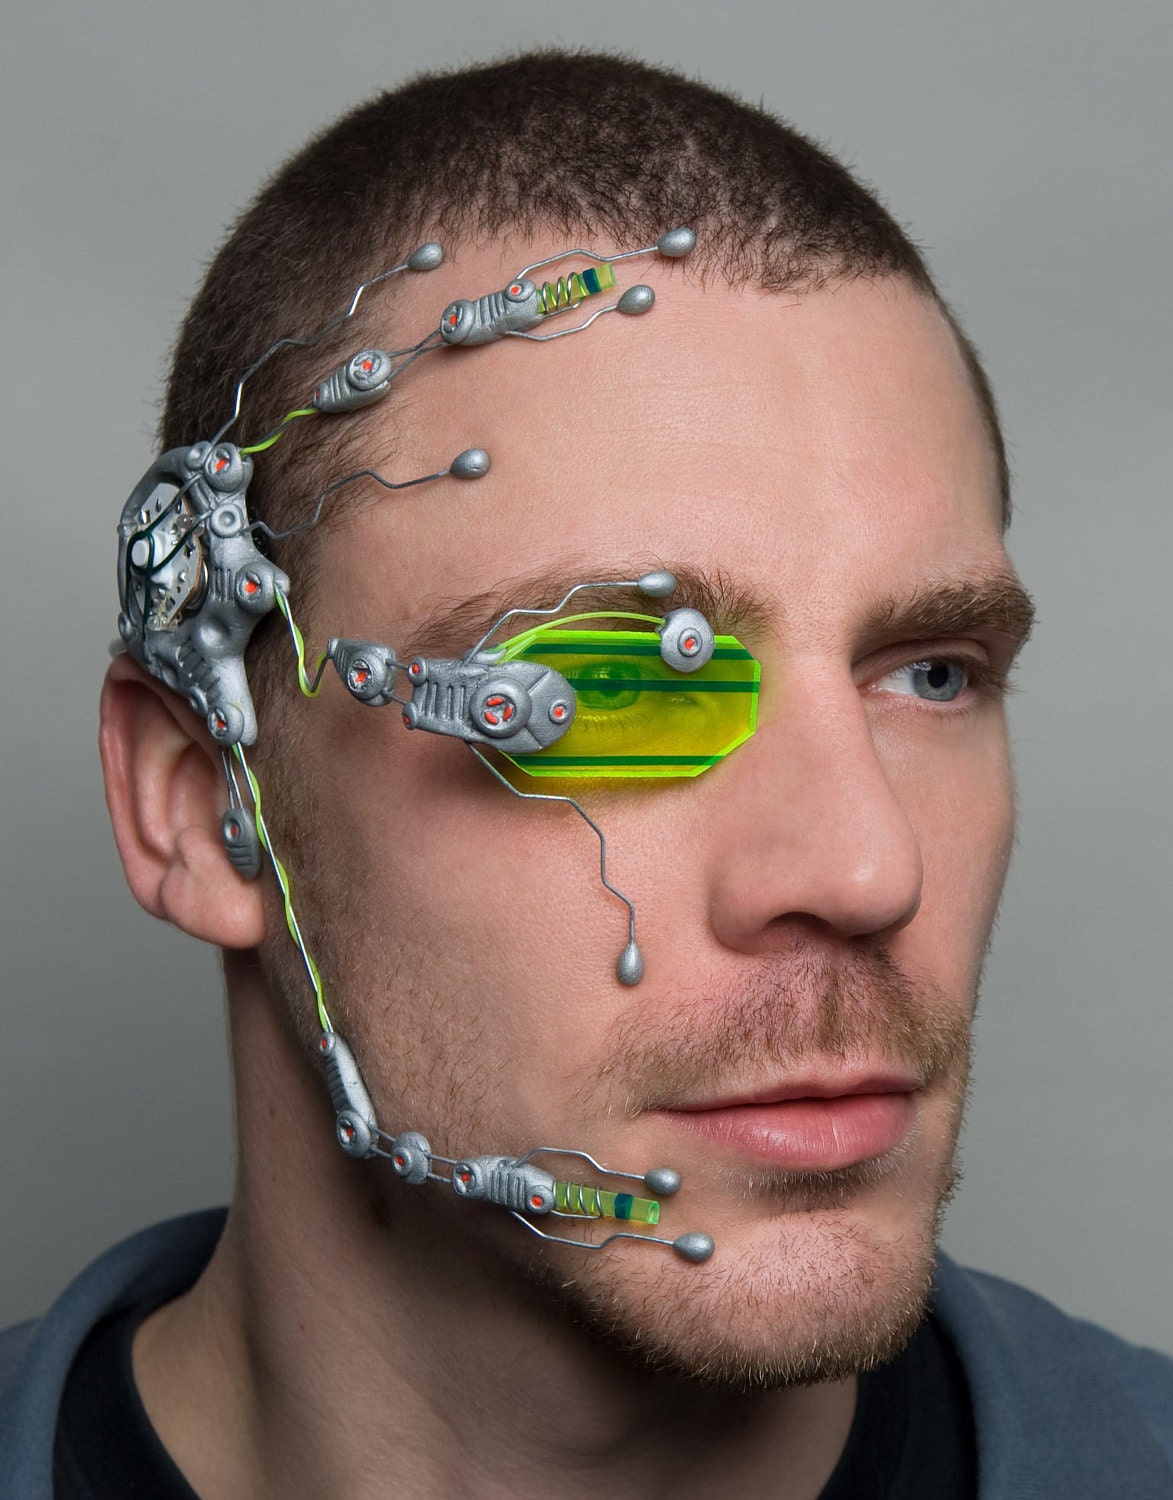 G2 flourotec cybernetic head system